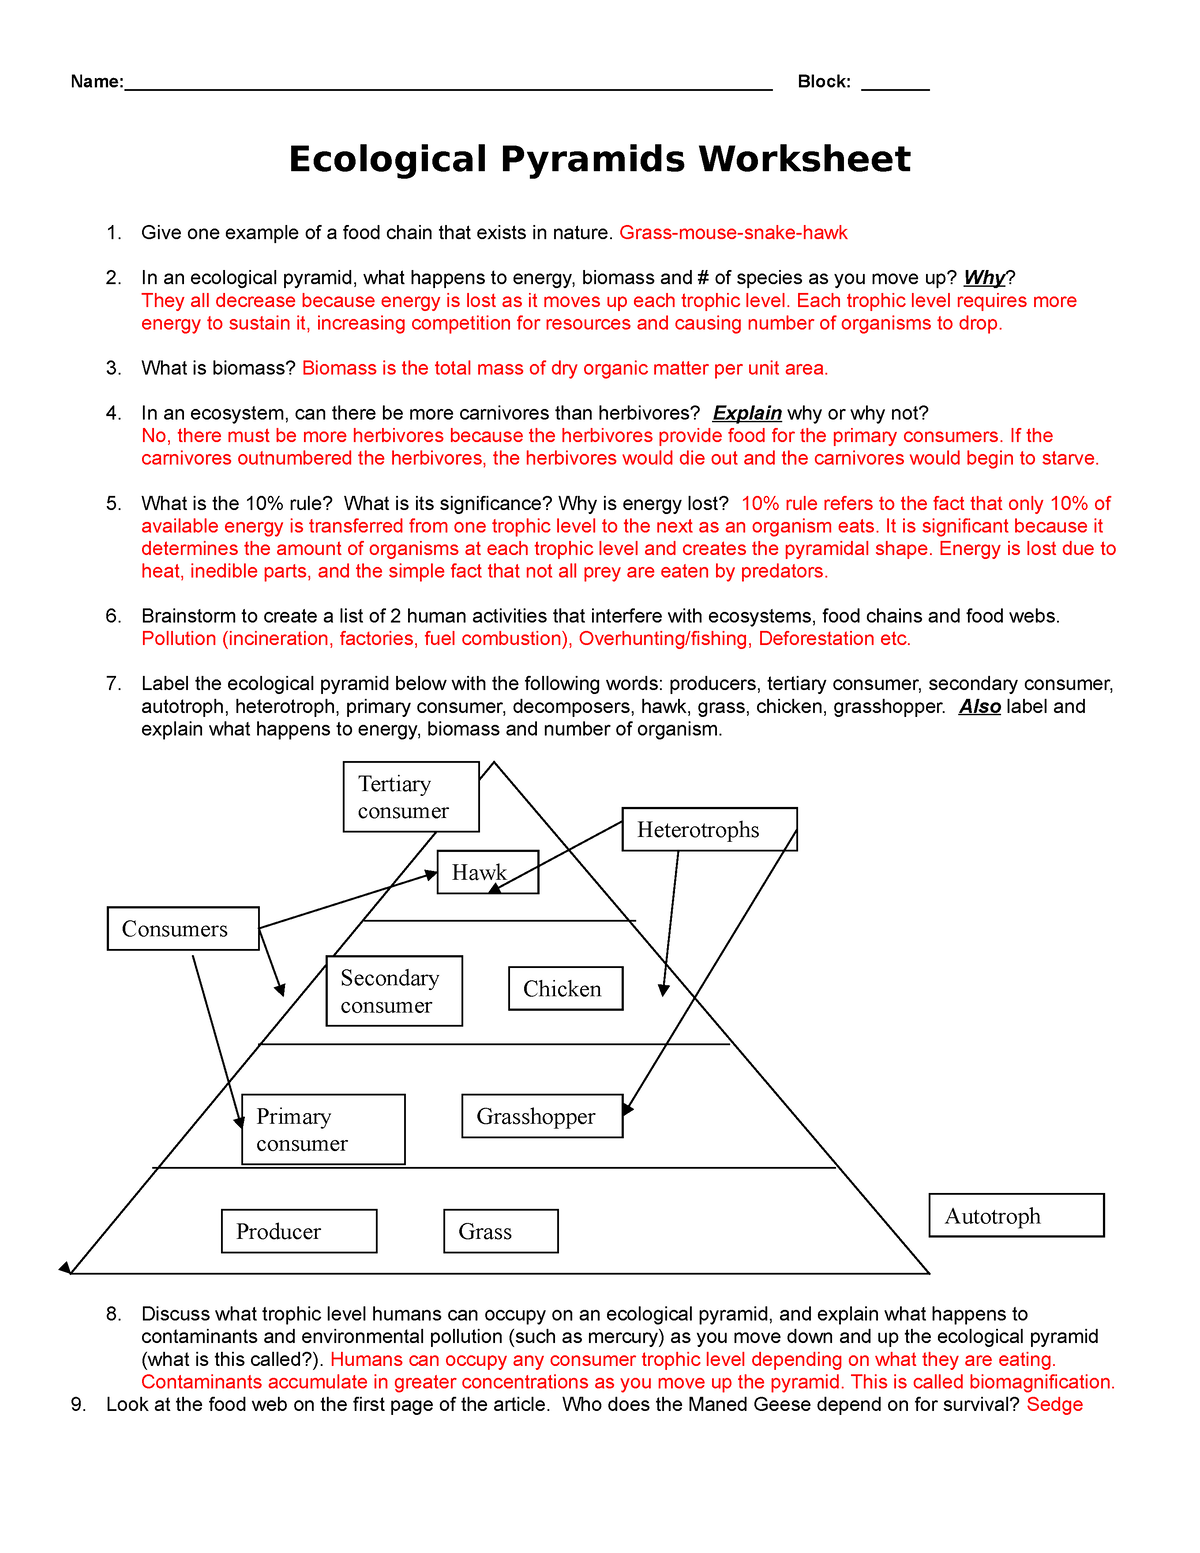 key-ecological-pyramids-worksheet-2013-studocu